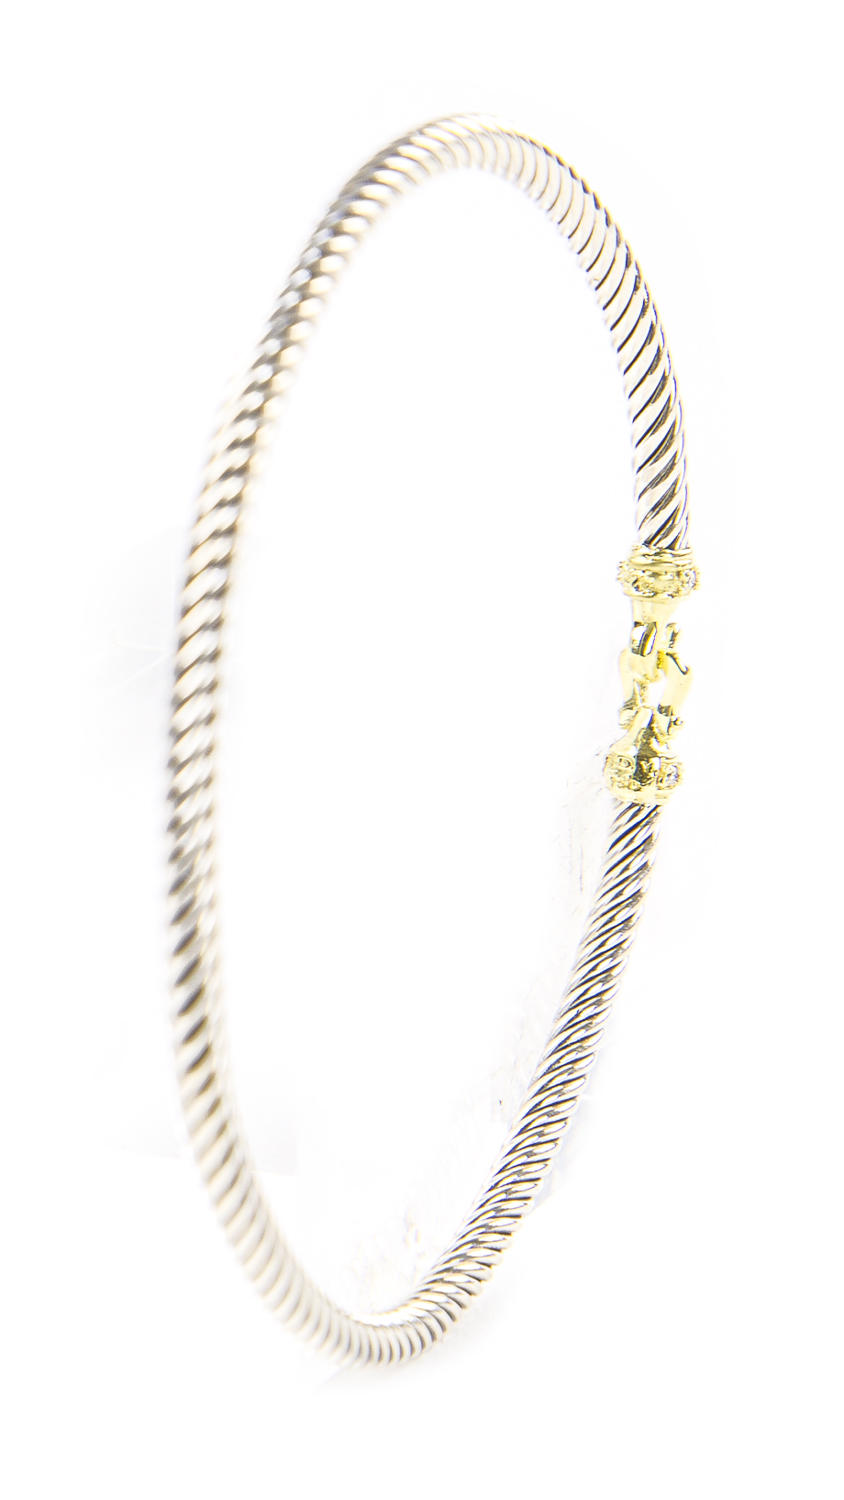 DAVID YURMAN Women's Cable Buckle Bracelet with Gold/Diamonds 3mm $650 NEW